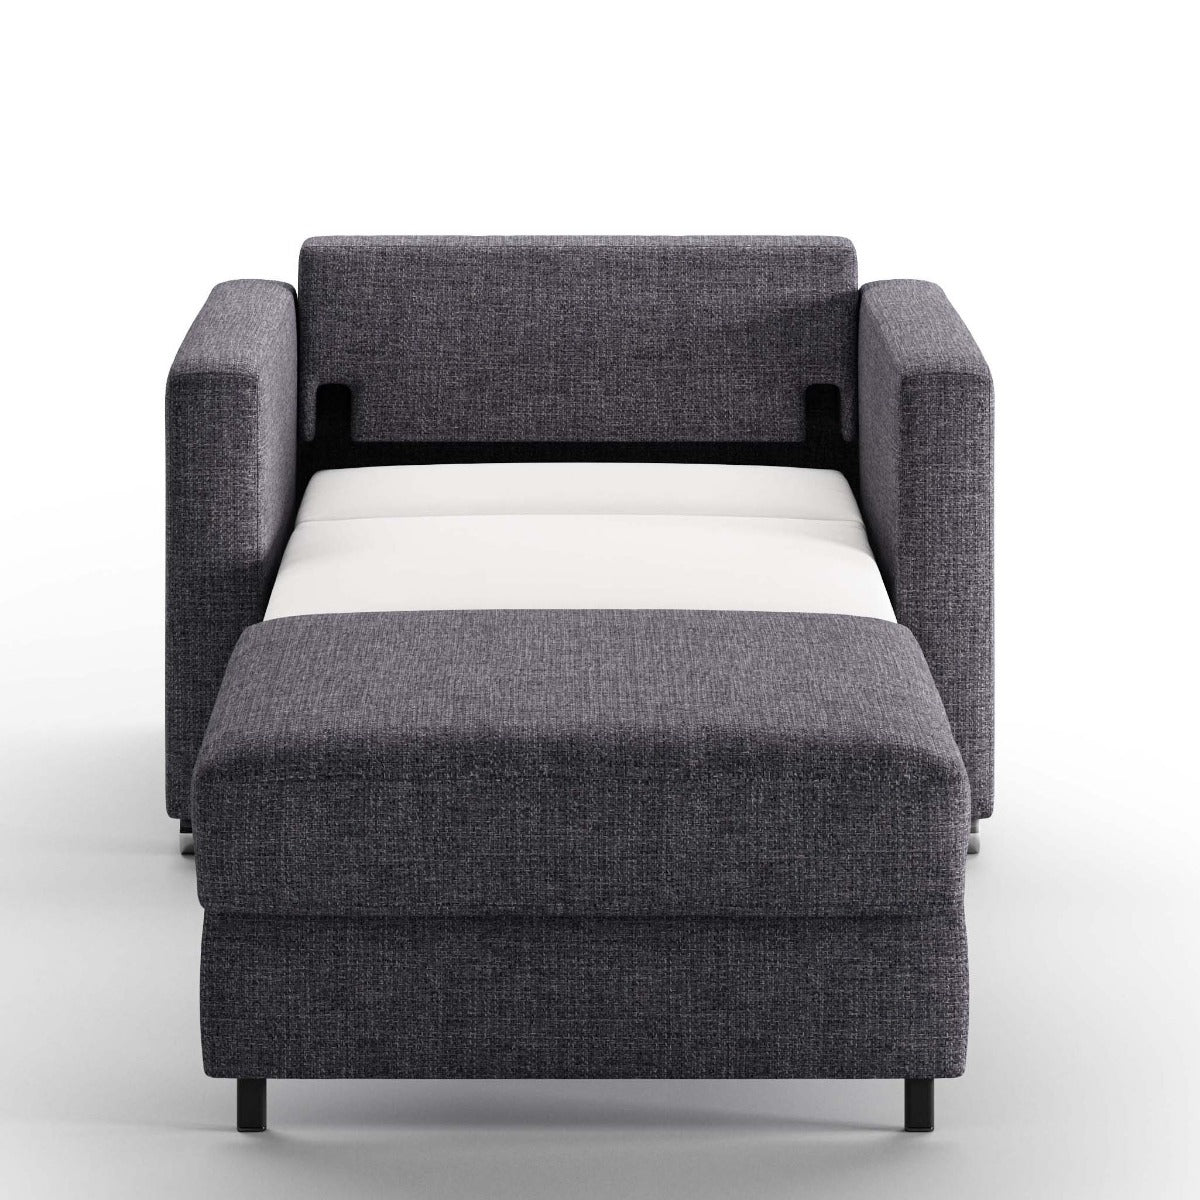 Luonto Furniture Fantasy Cot Chair Sleeper - Rene 04 - 217/6 Chrome